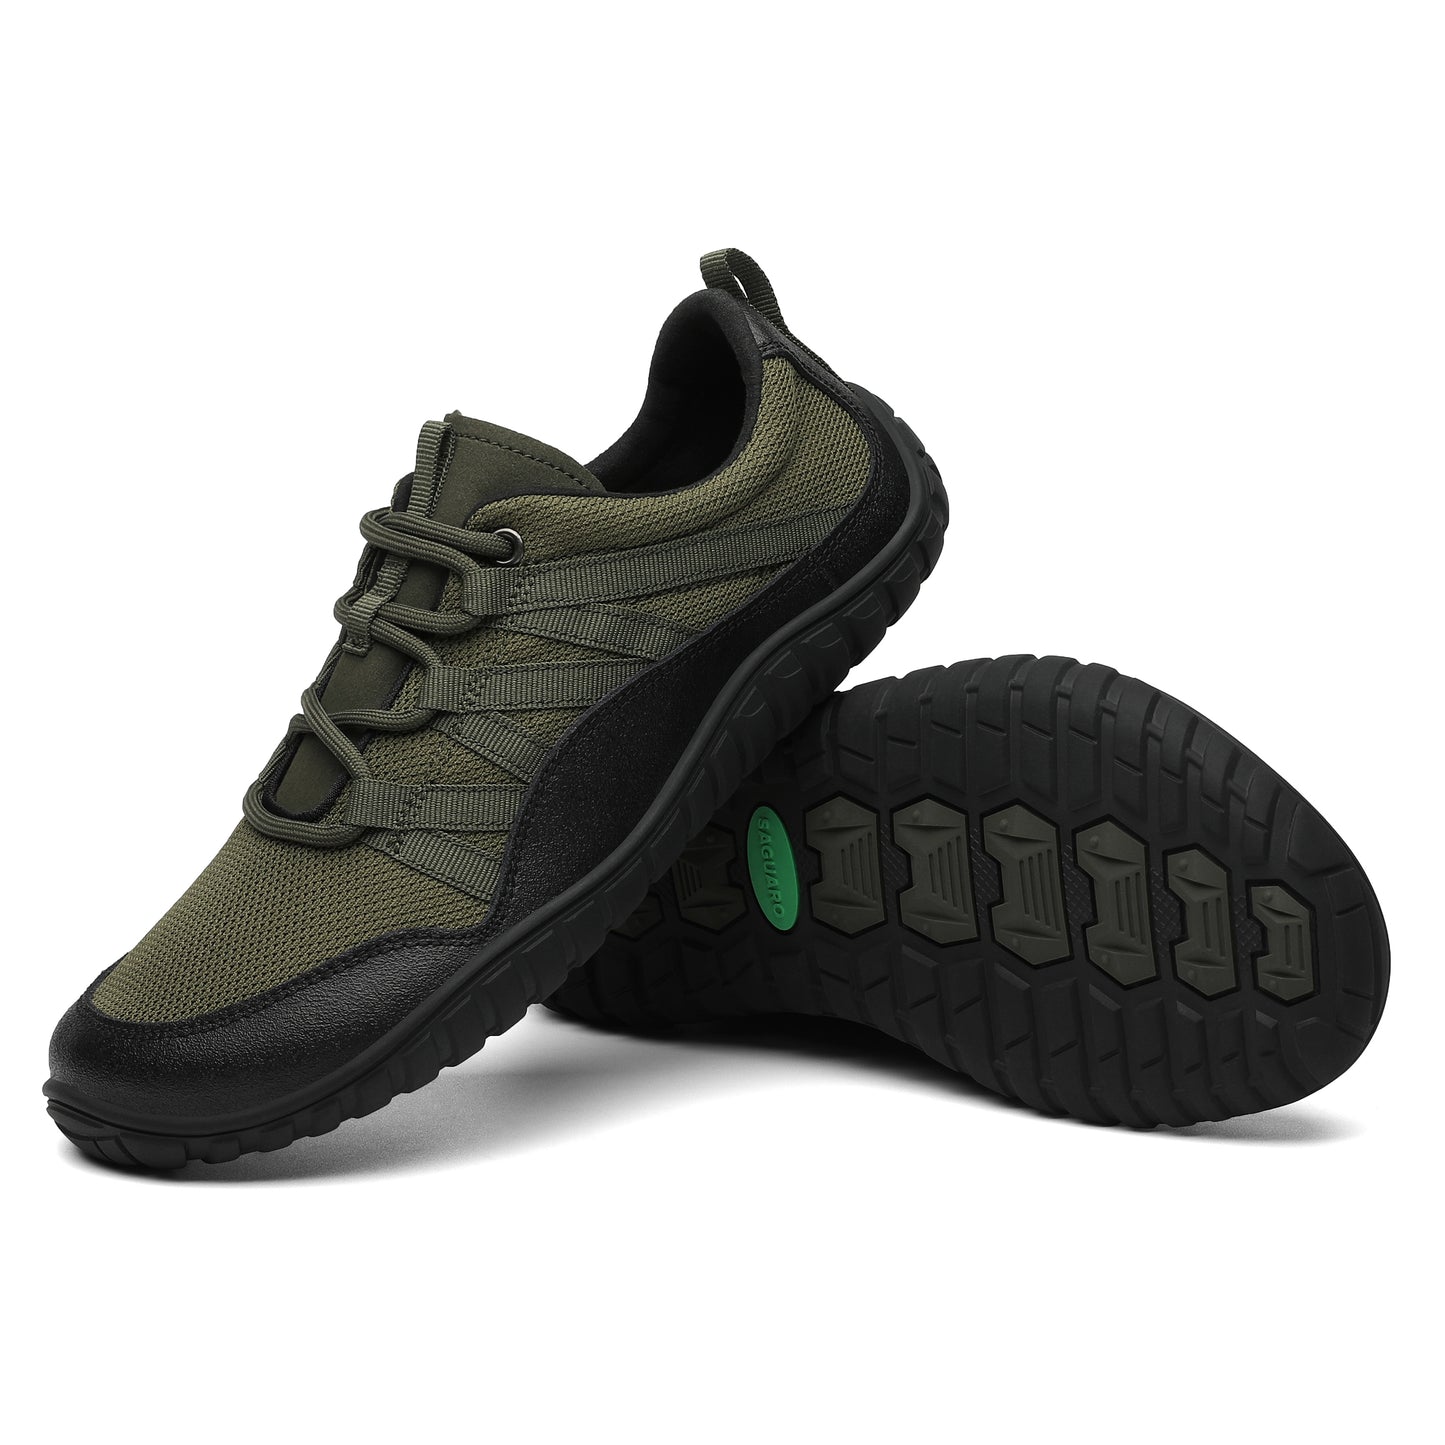 Forestep I - Verde - Barefoot shoes